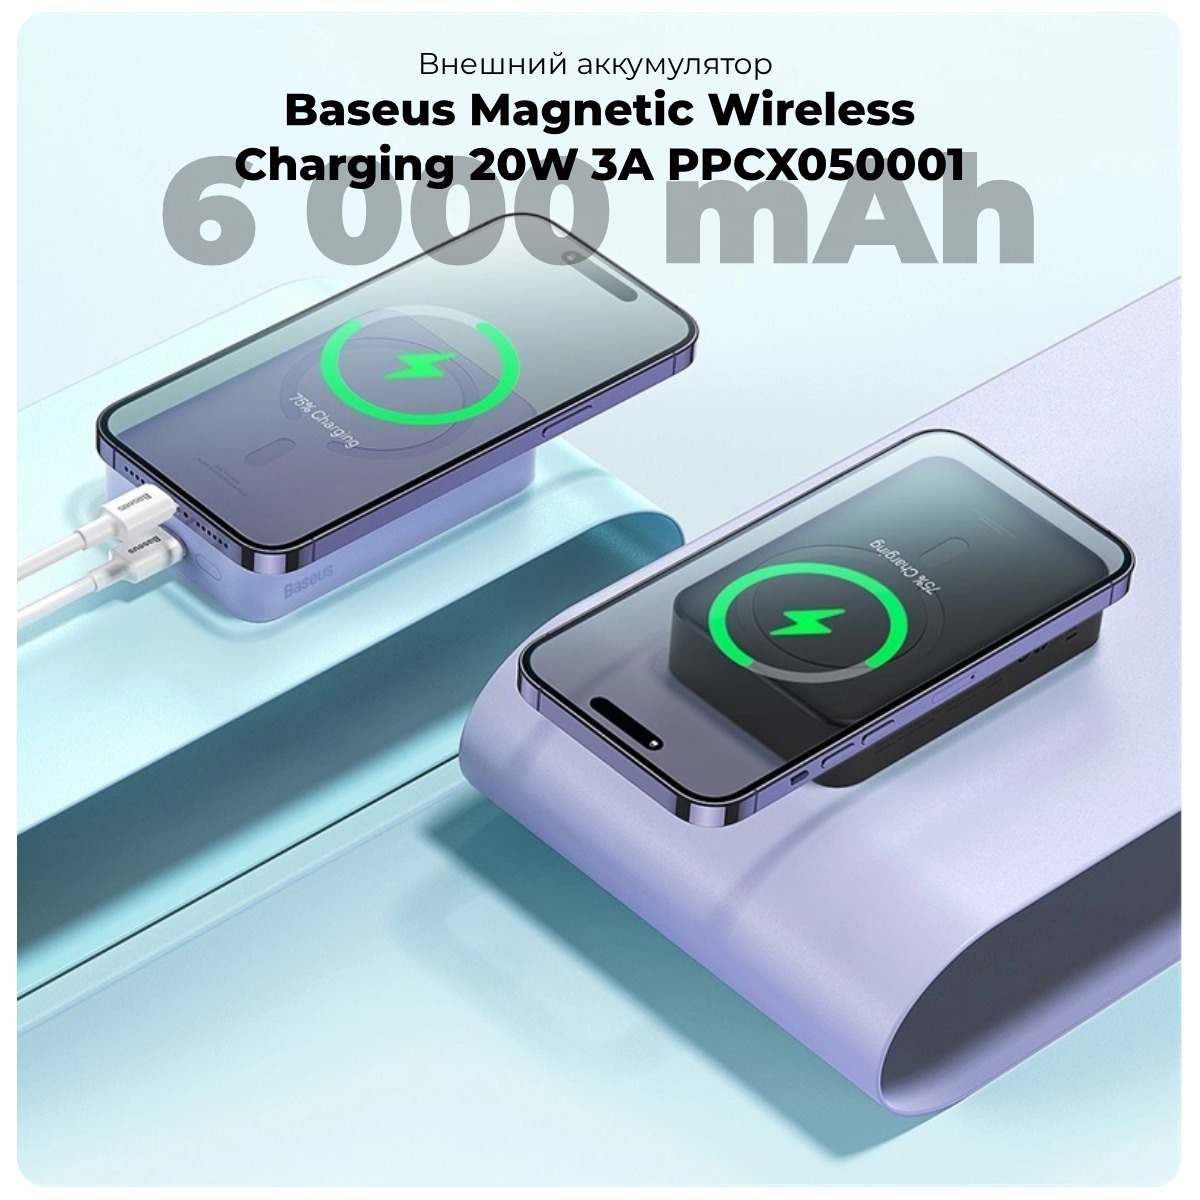 Baseus-Magnetic-PPCX050001-01